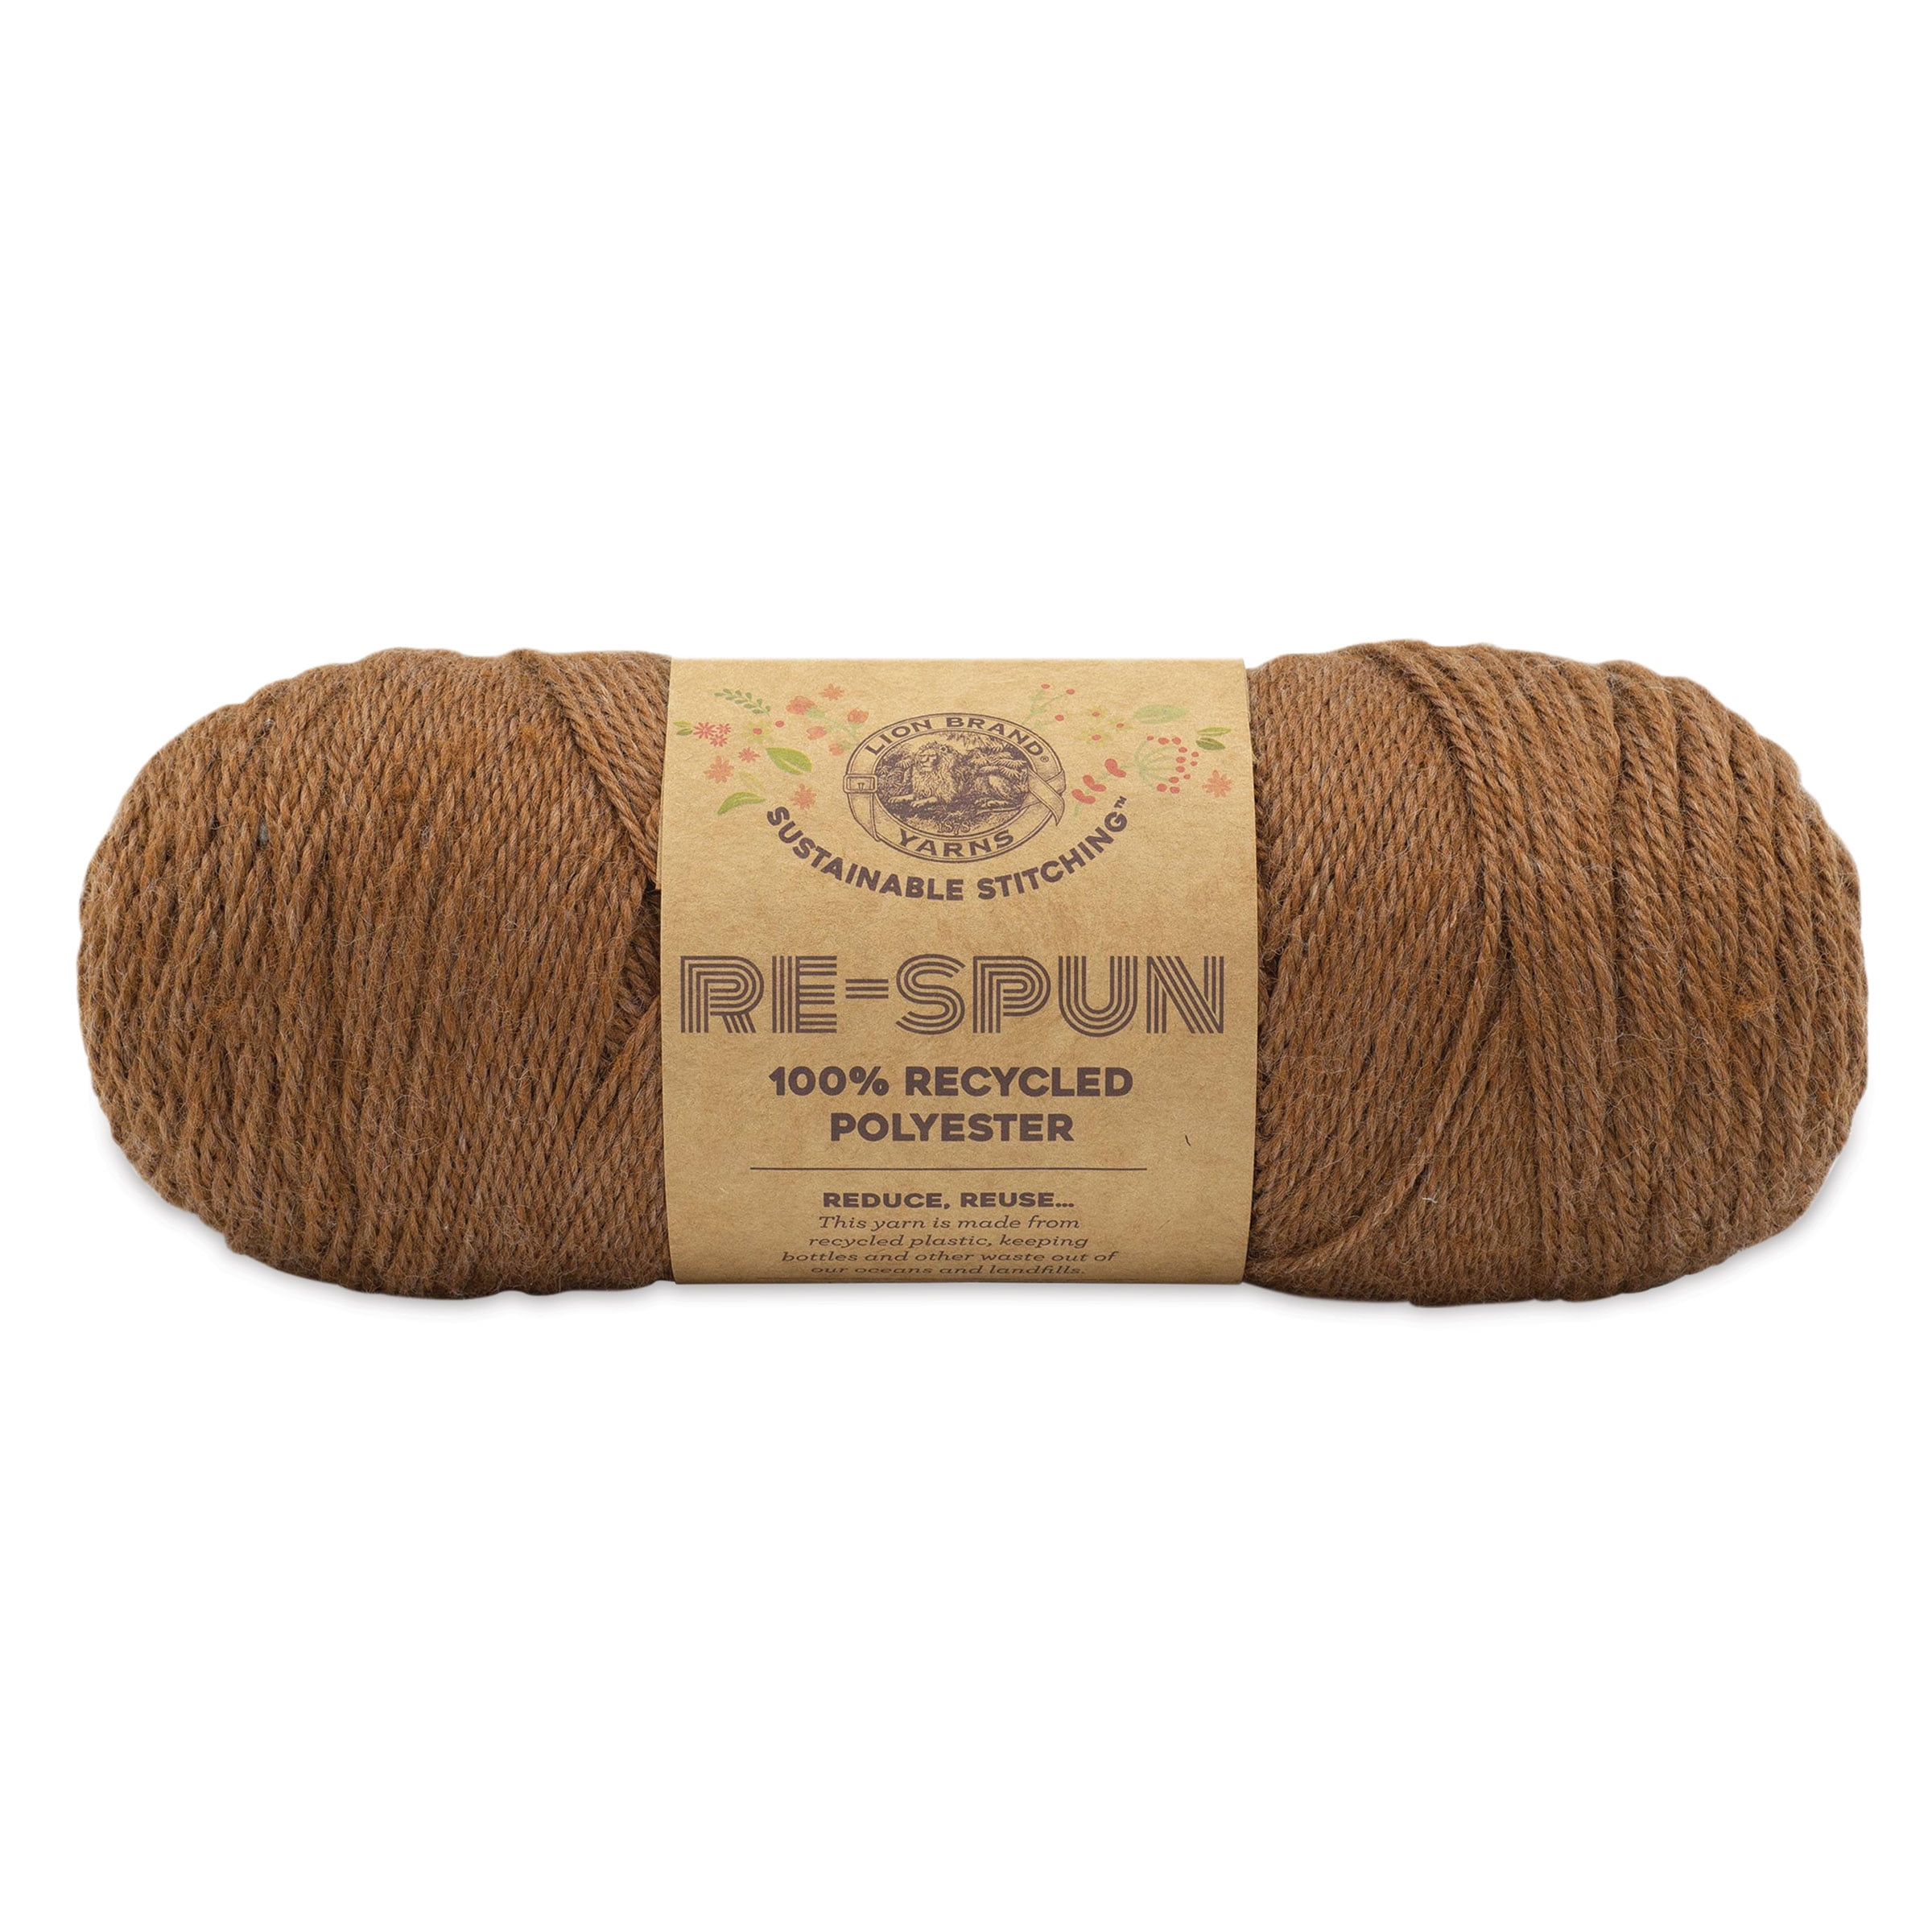 Re-Spun Yarn from Lion Brand 